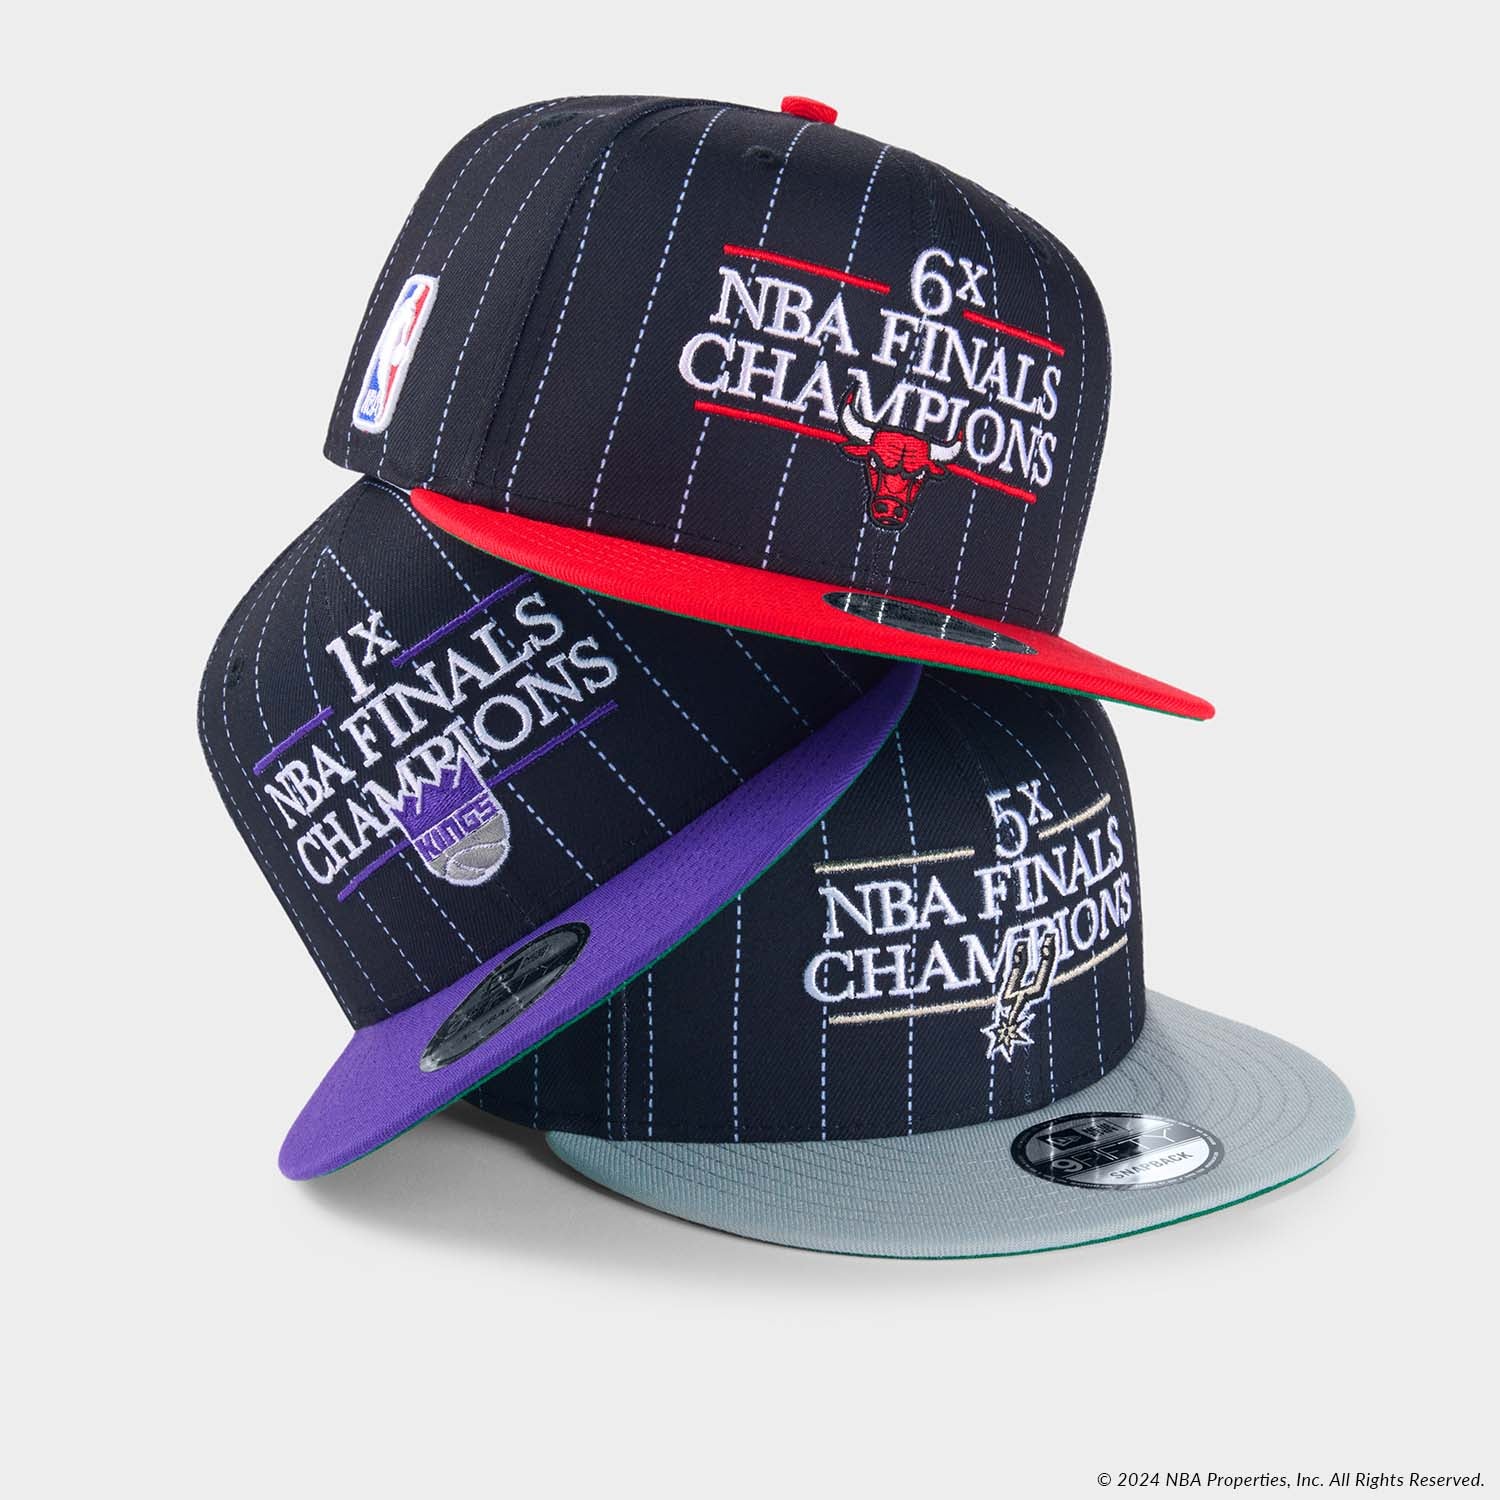 Shop Just Caps Champion Pinstripe in select NBA teams